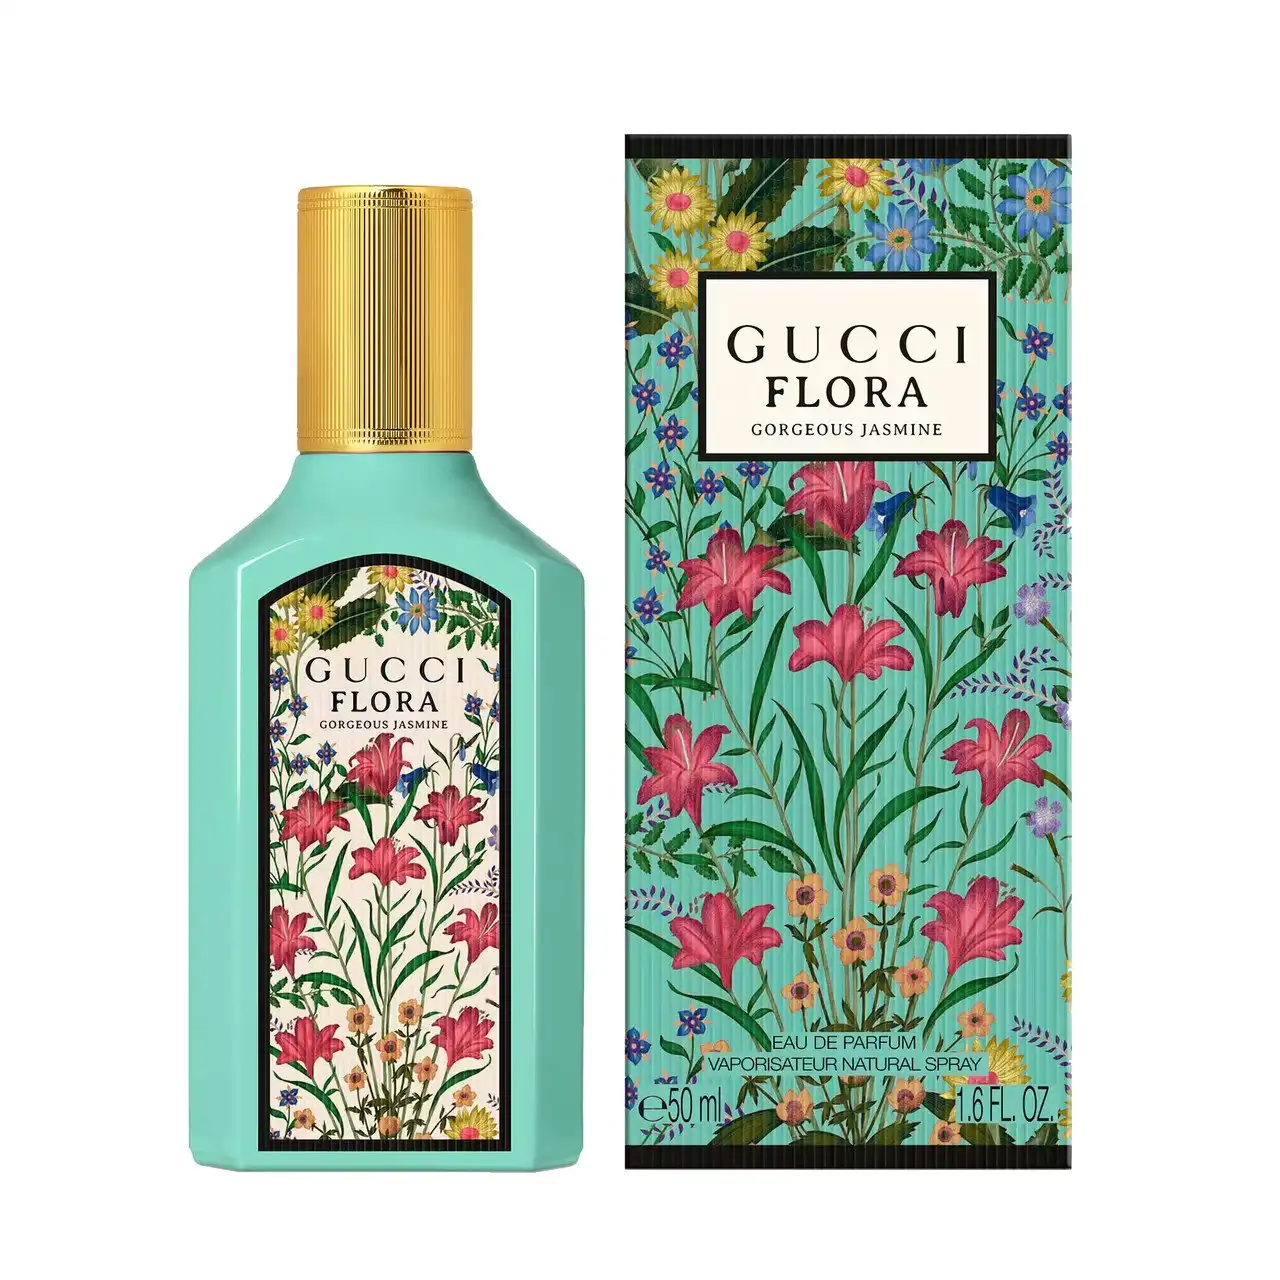 Gucci Flora Gorgeous Jasmine 50ml EDP By Gucci (Womens)